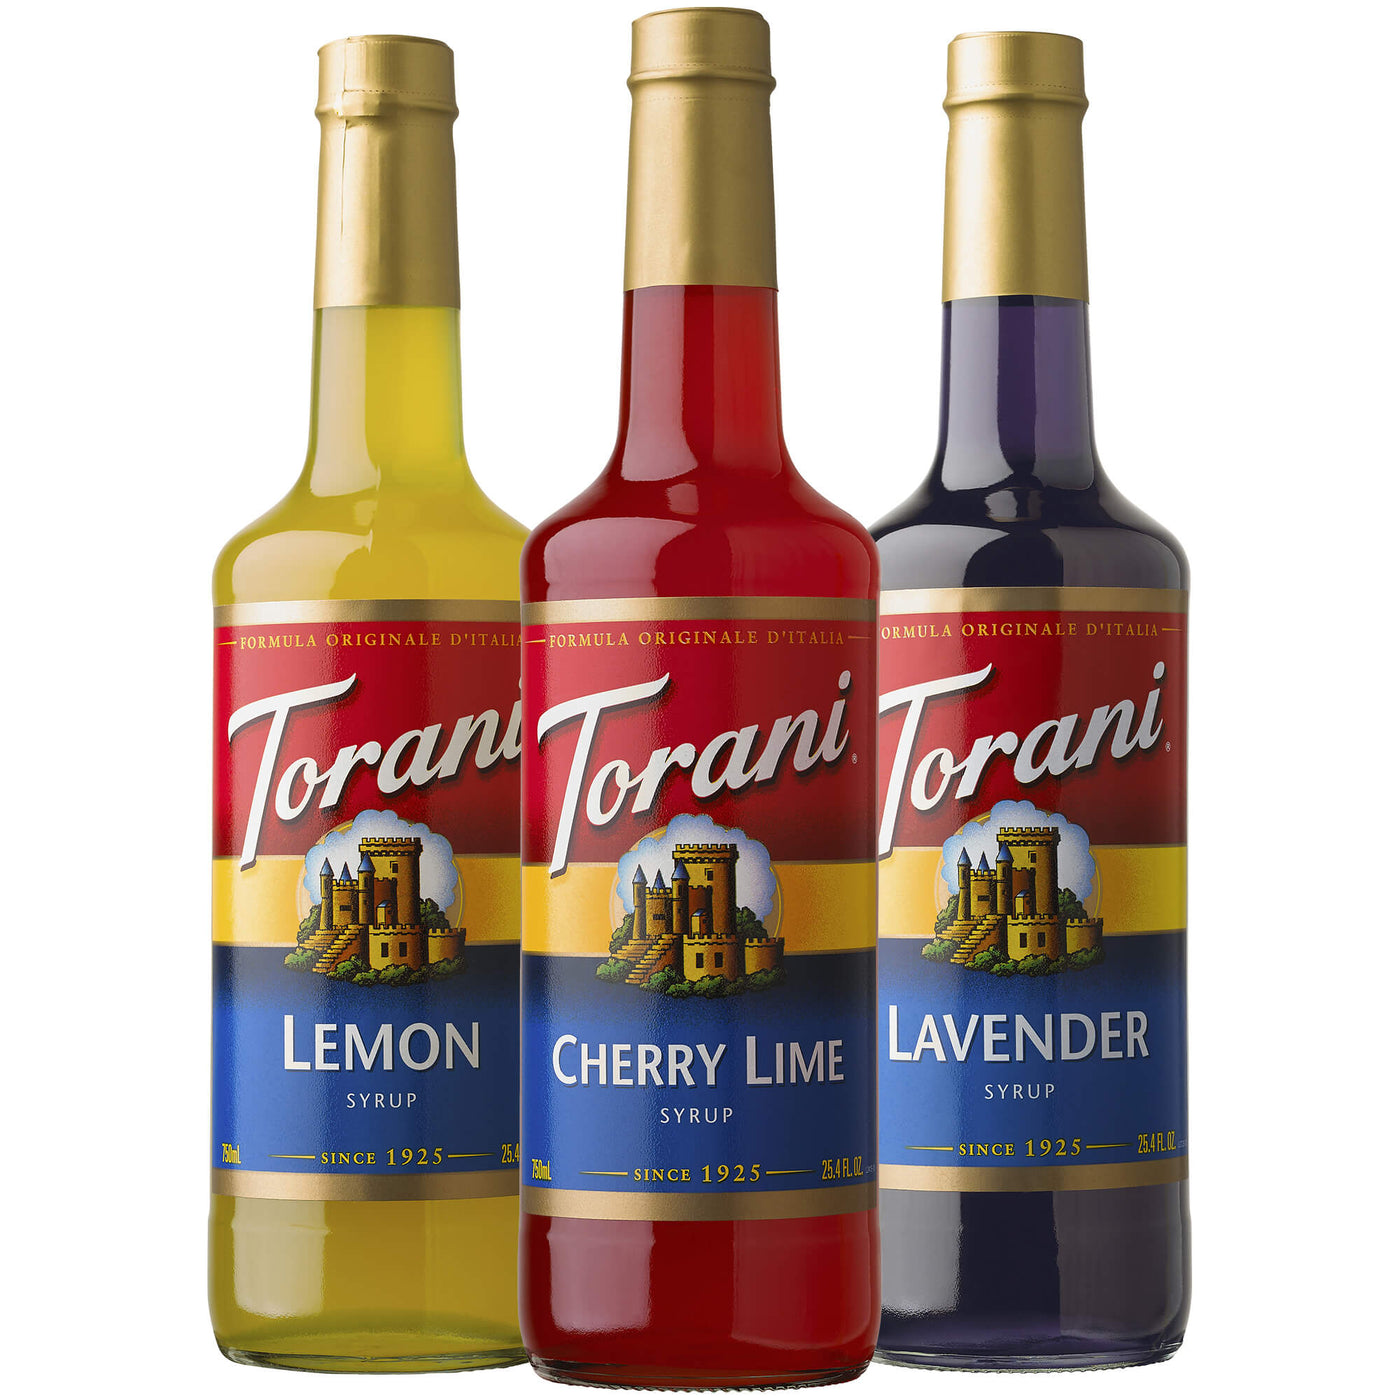 Lavender, Lemon, and Cherry Lime syrup bottles